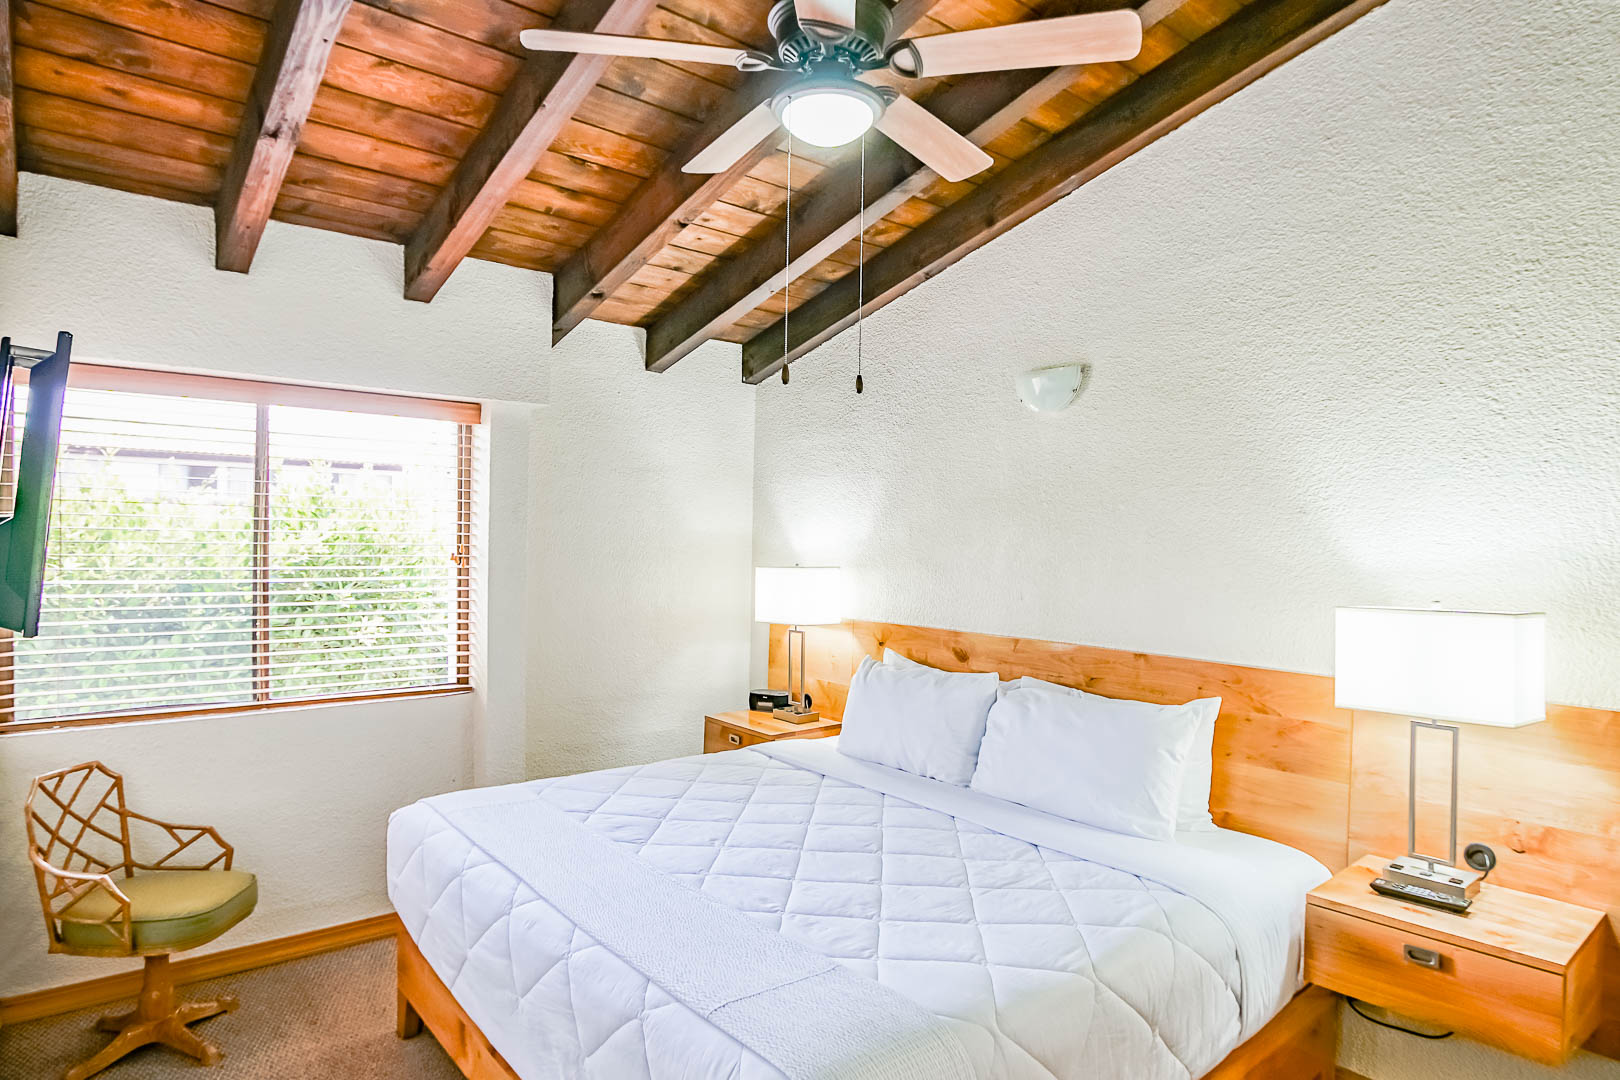 A spacious bedroom at VRI's La Paloma in Rosarito, Mexico.